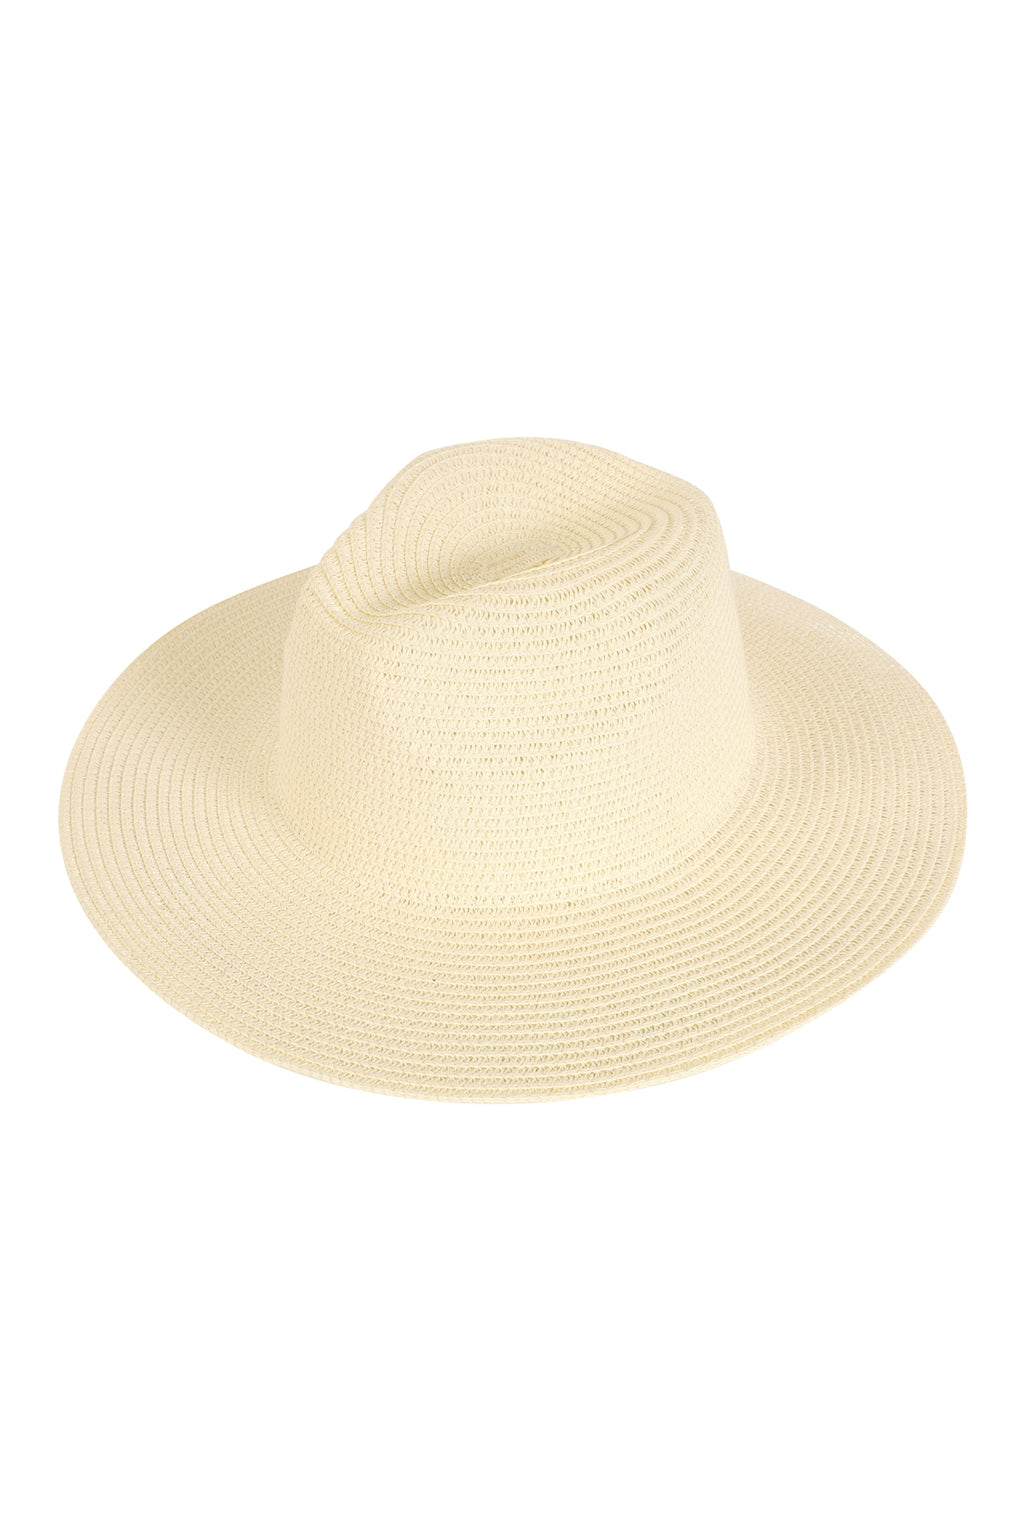 Classic Panama Brim Summer Hat Ivory - Pack of 6